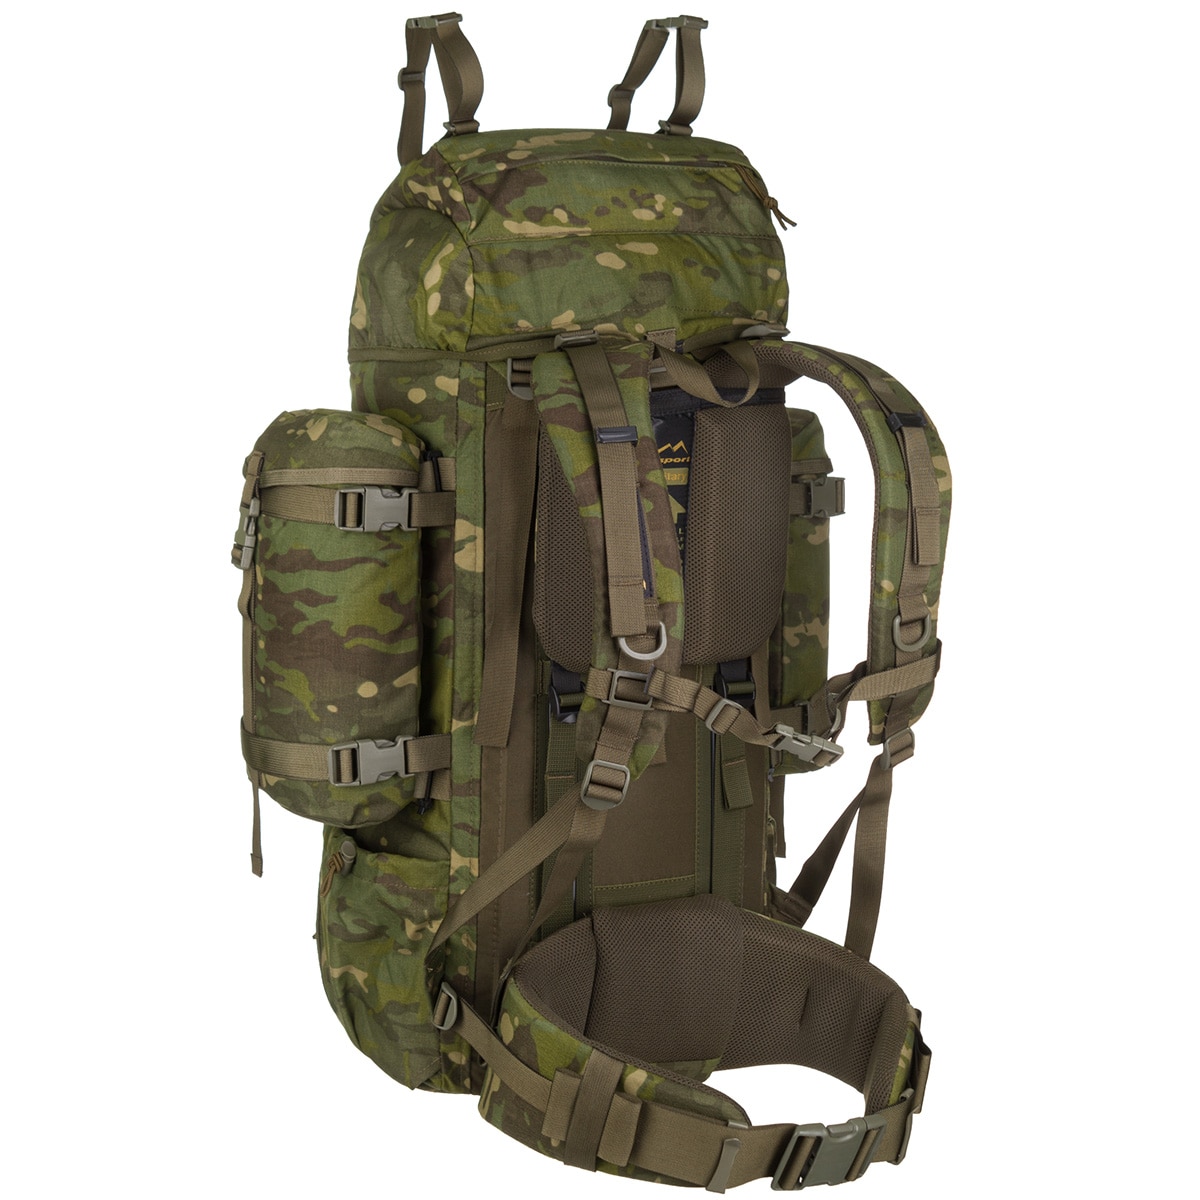 Рюкзак Wisport Reindeer 55 л MultiCam Tropic Backpack